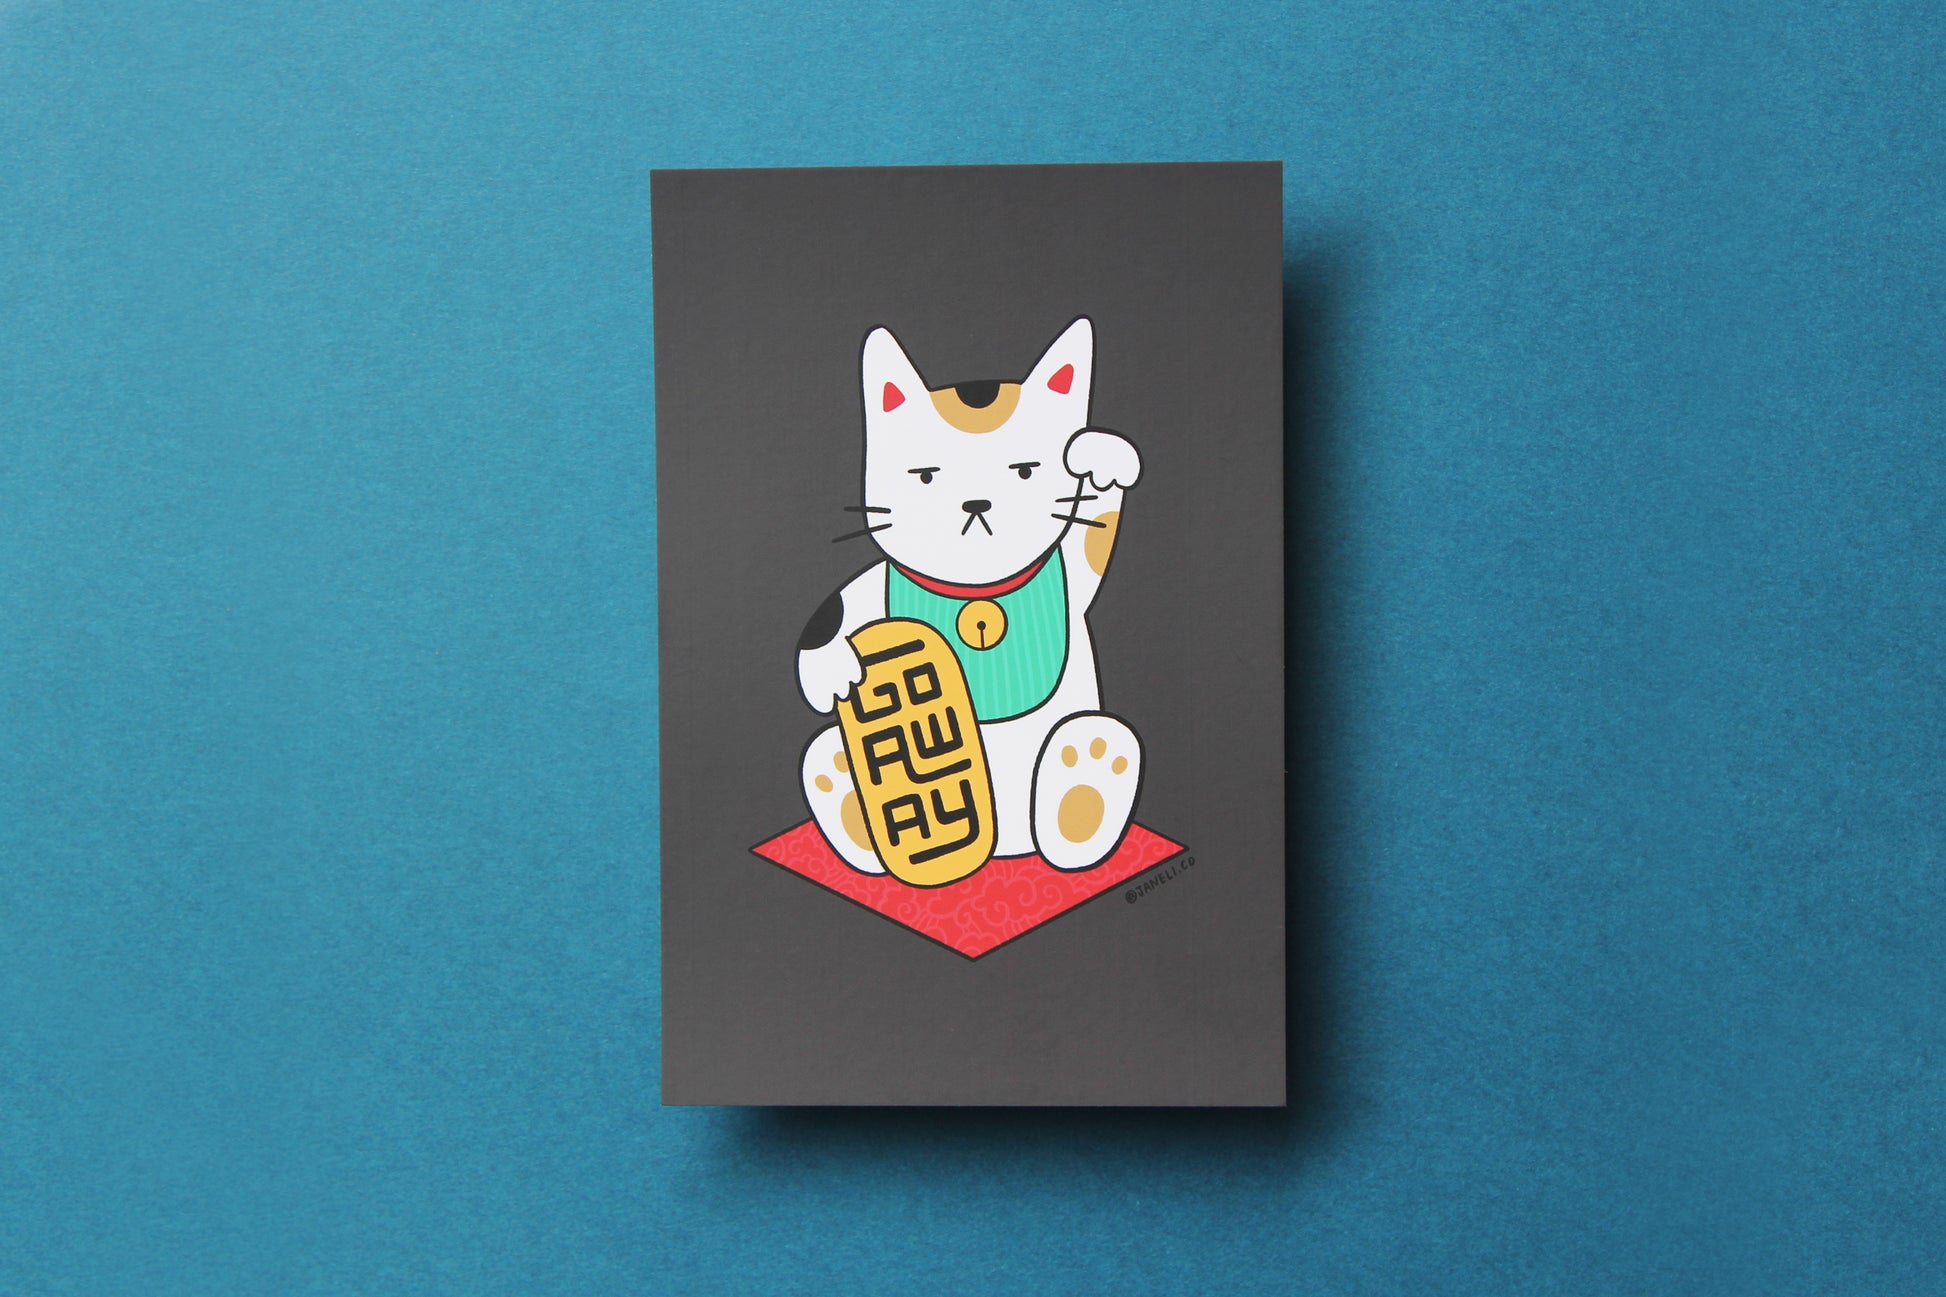 A JaneLi.Co mini print/postcard that shows a maneki neko cat holding a gold bar that says "Go Away" over a teal background.